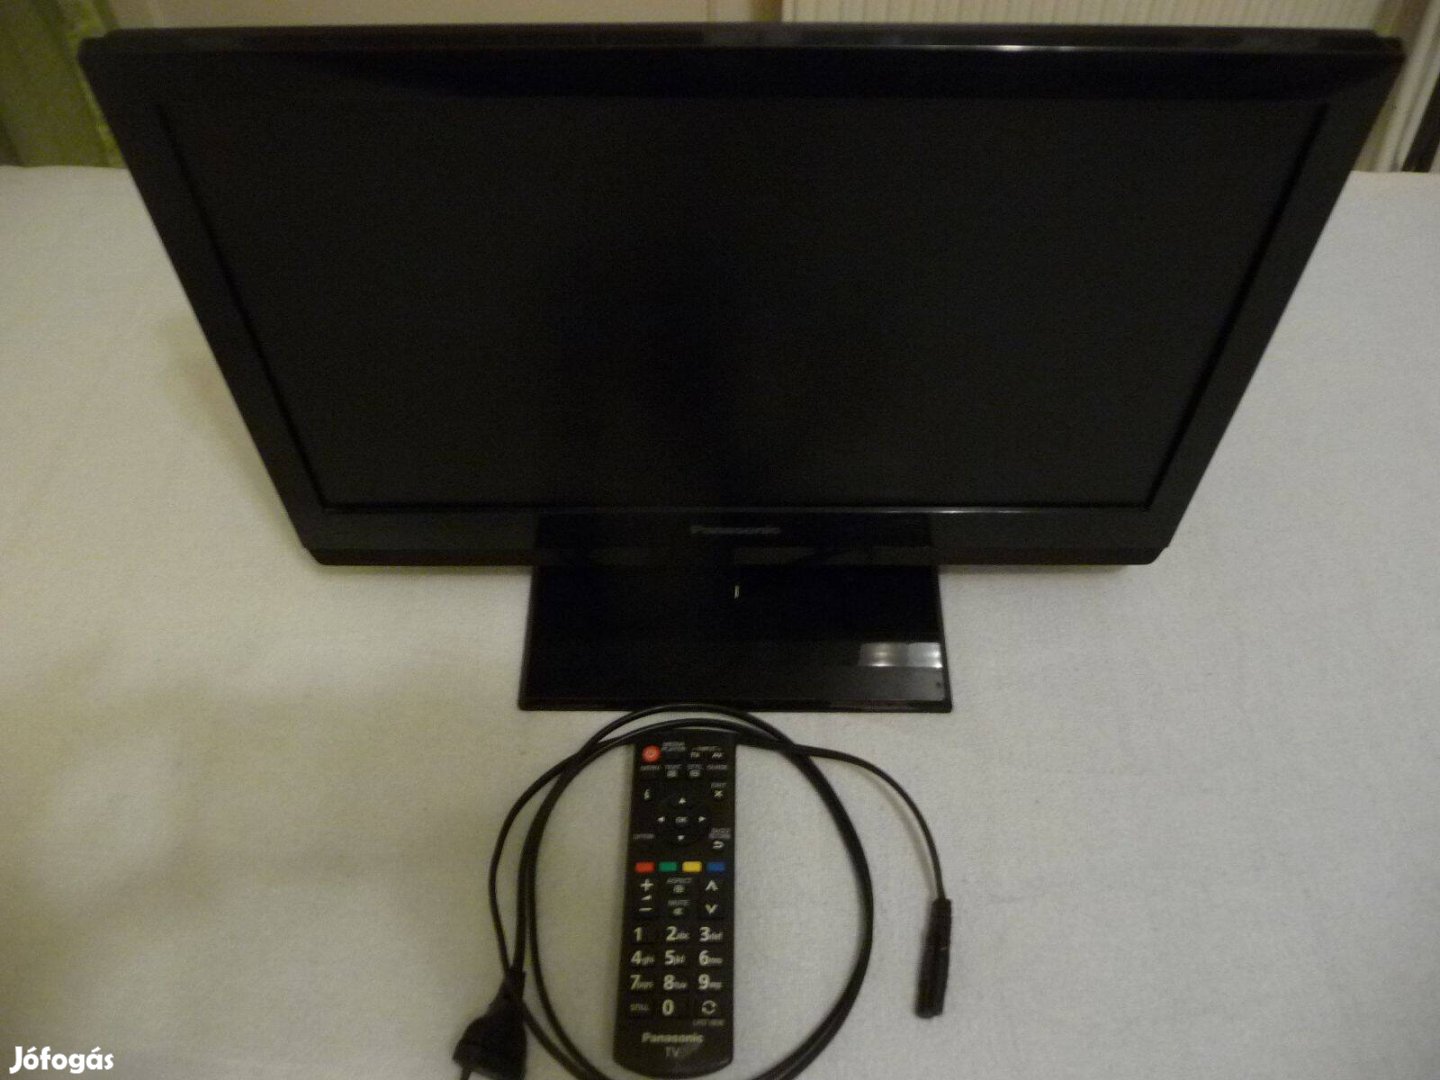 Panasonic 19" LED LCD Monitor TV USB HDMI DVB-T DVB-C